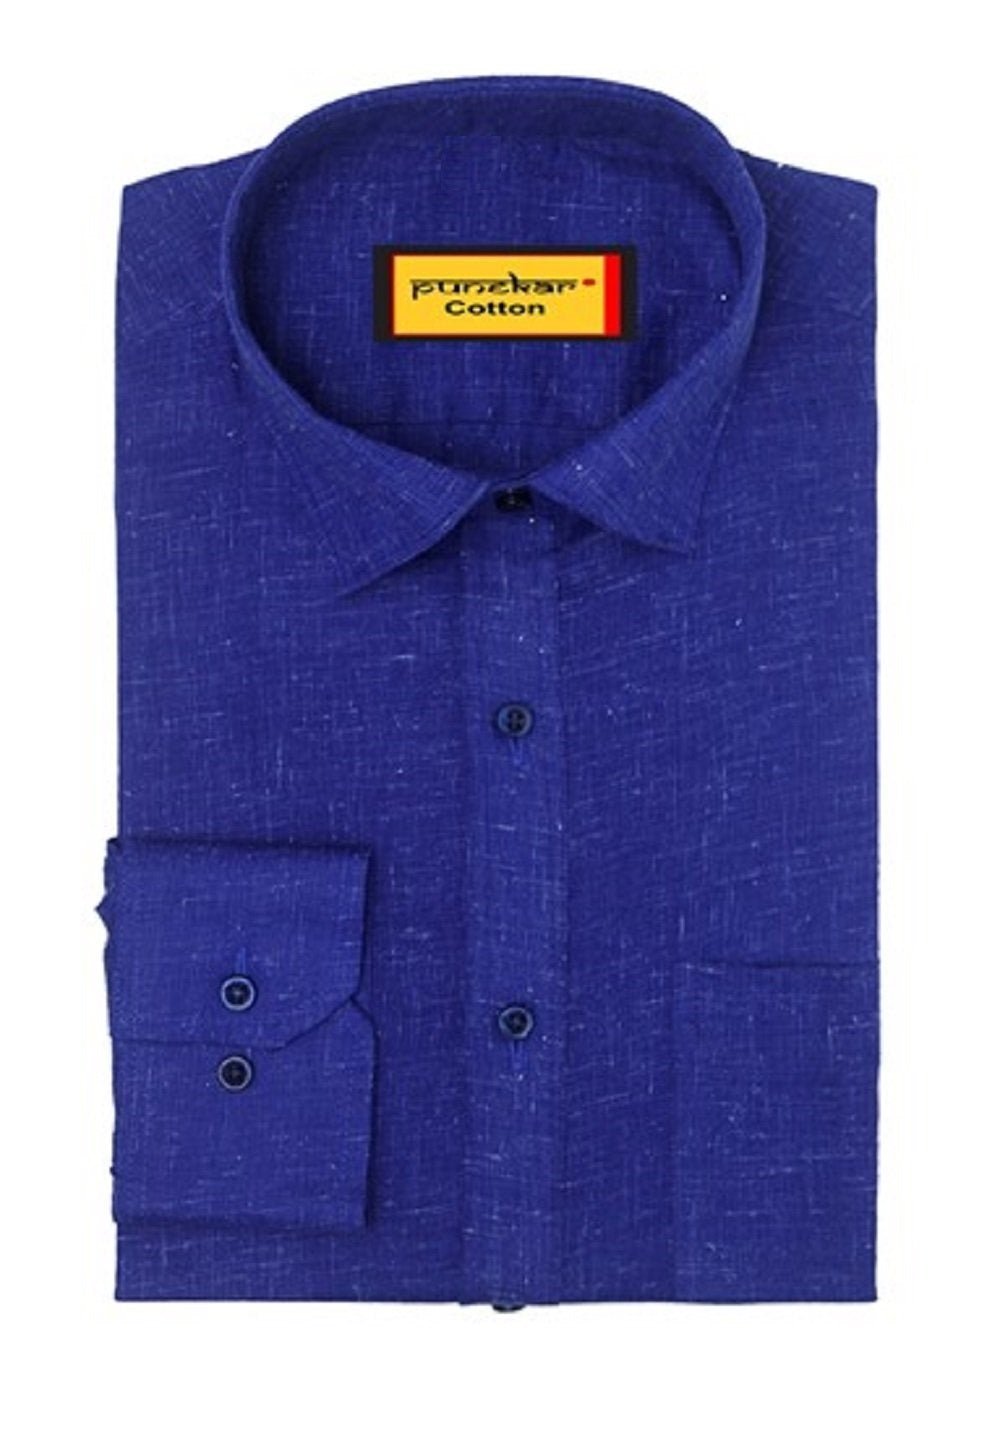 Punekar Cotton Men's Formal Handmade Dark Blue Color Shirt for Men's. - Punekar Cotton